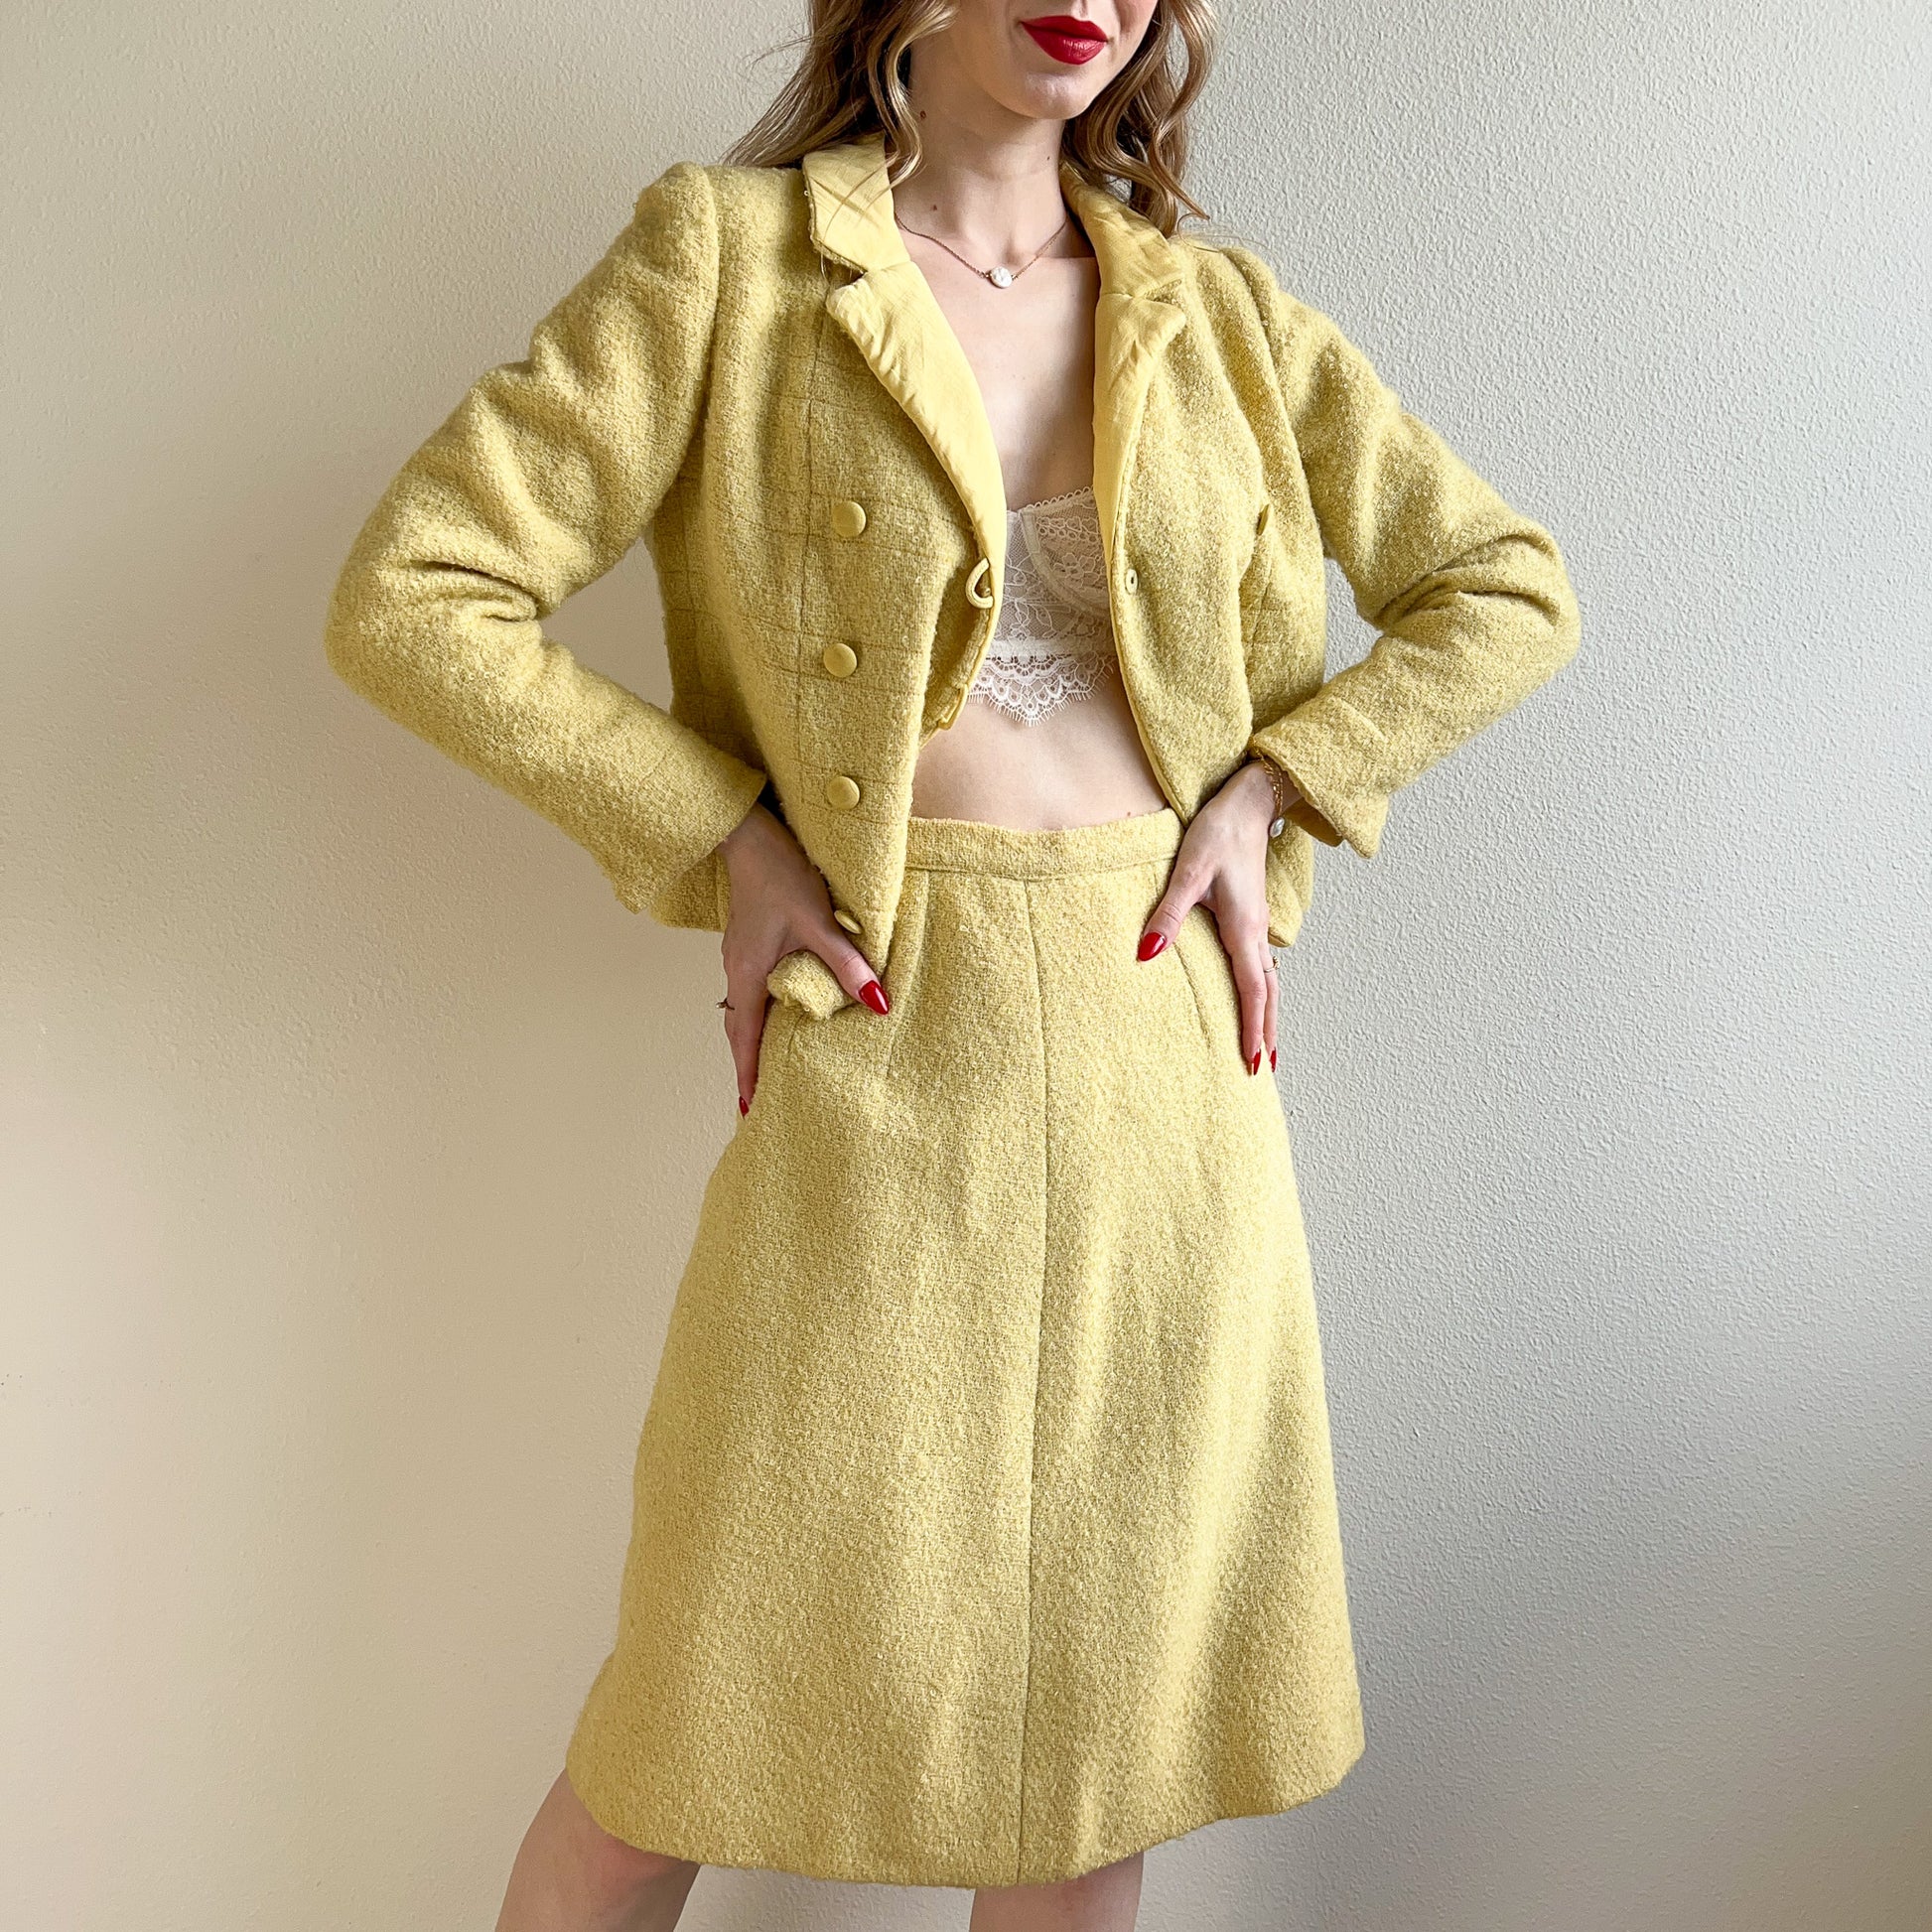 Yellow Tweed Skirt Suit